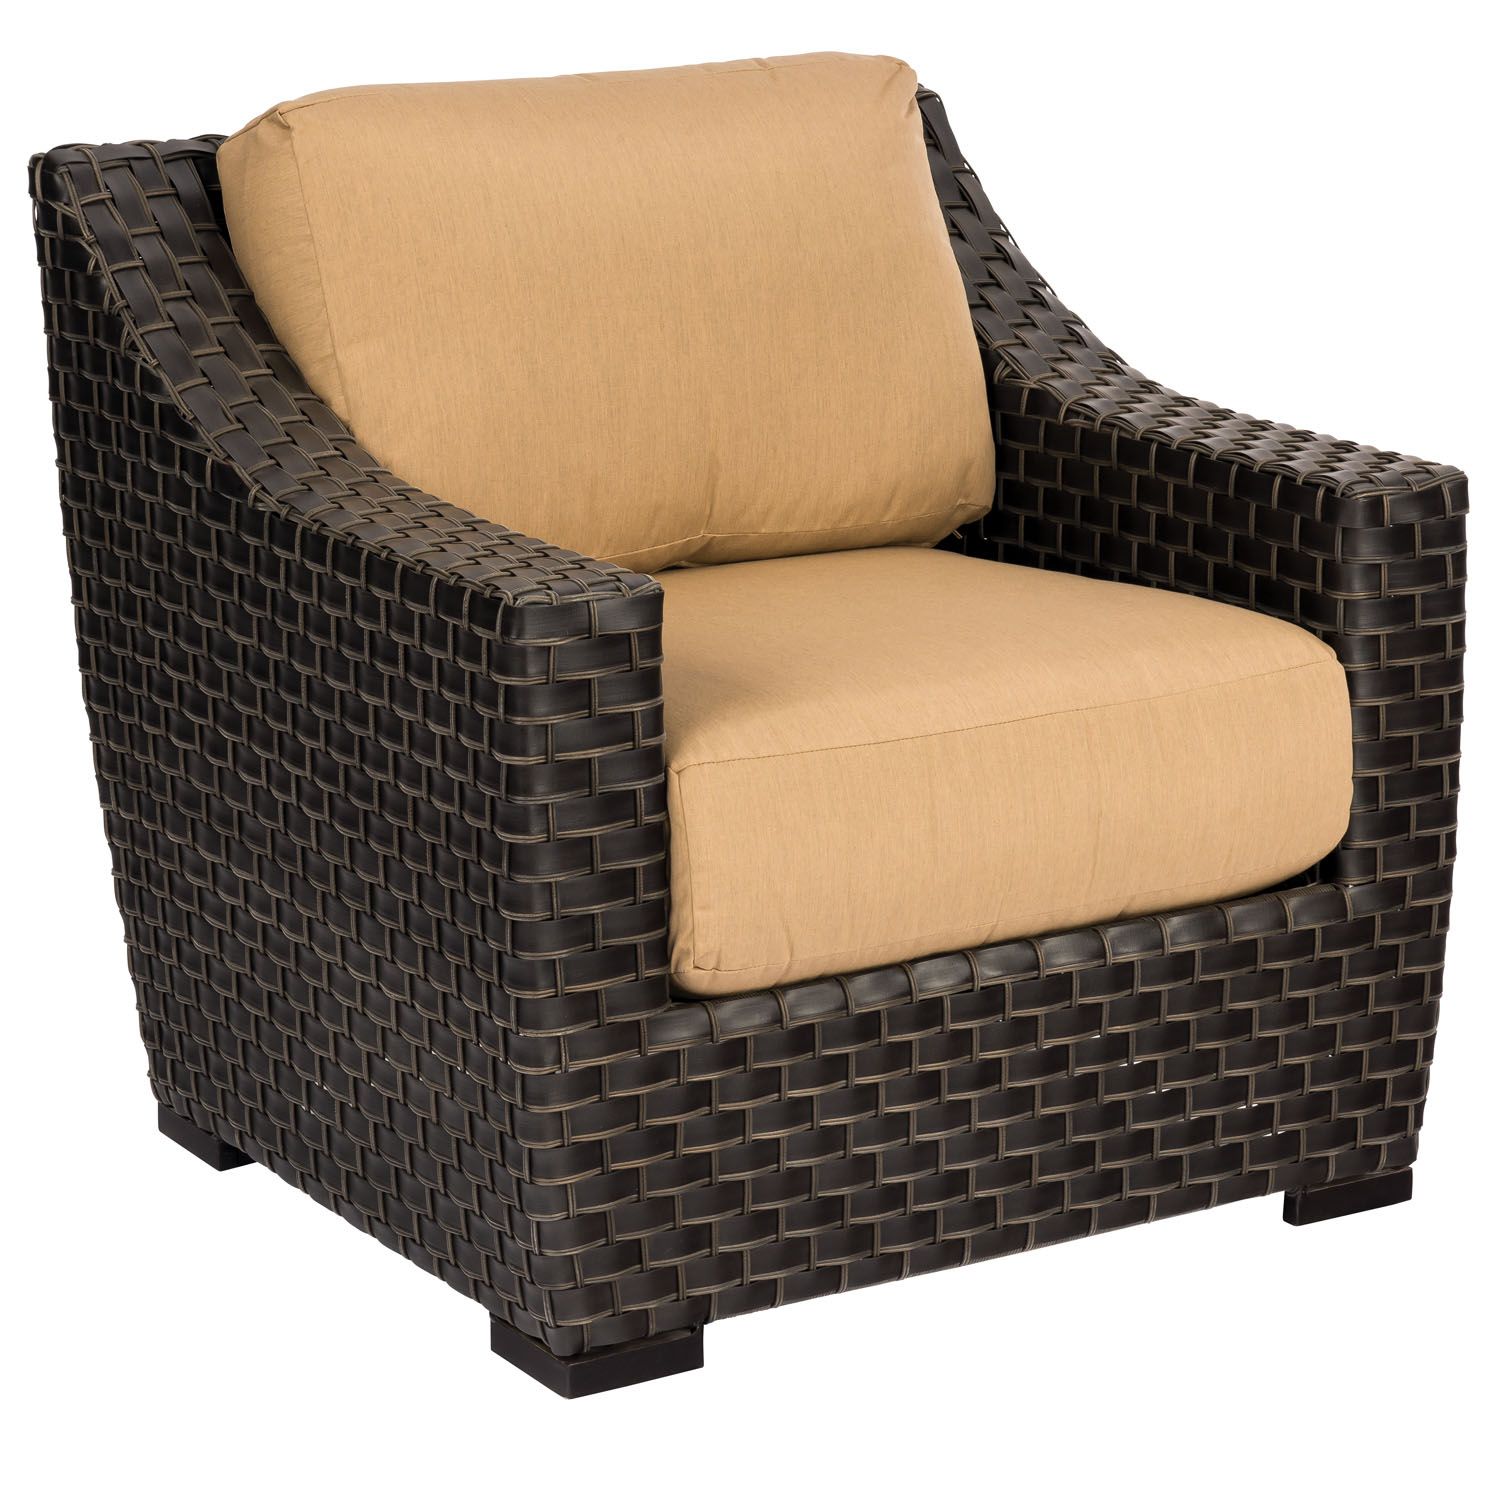 Cooper Lounge Chair By Woodard